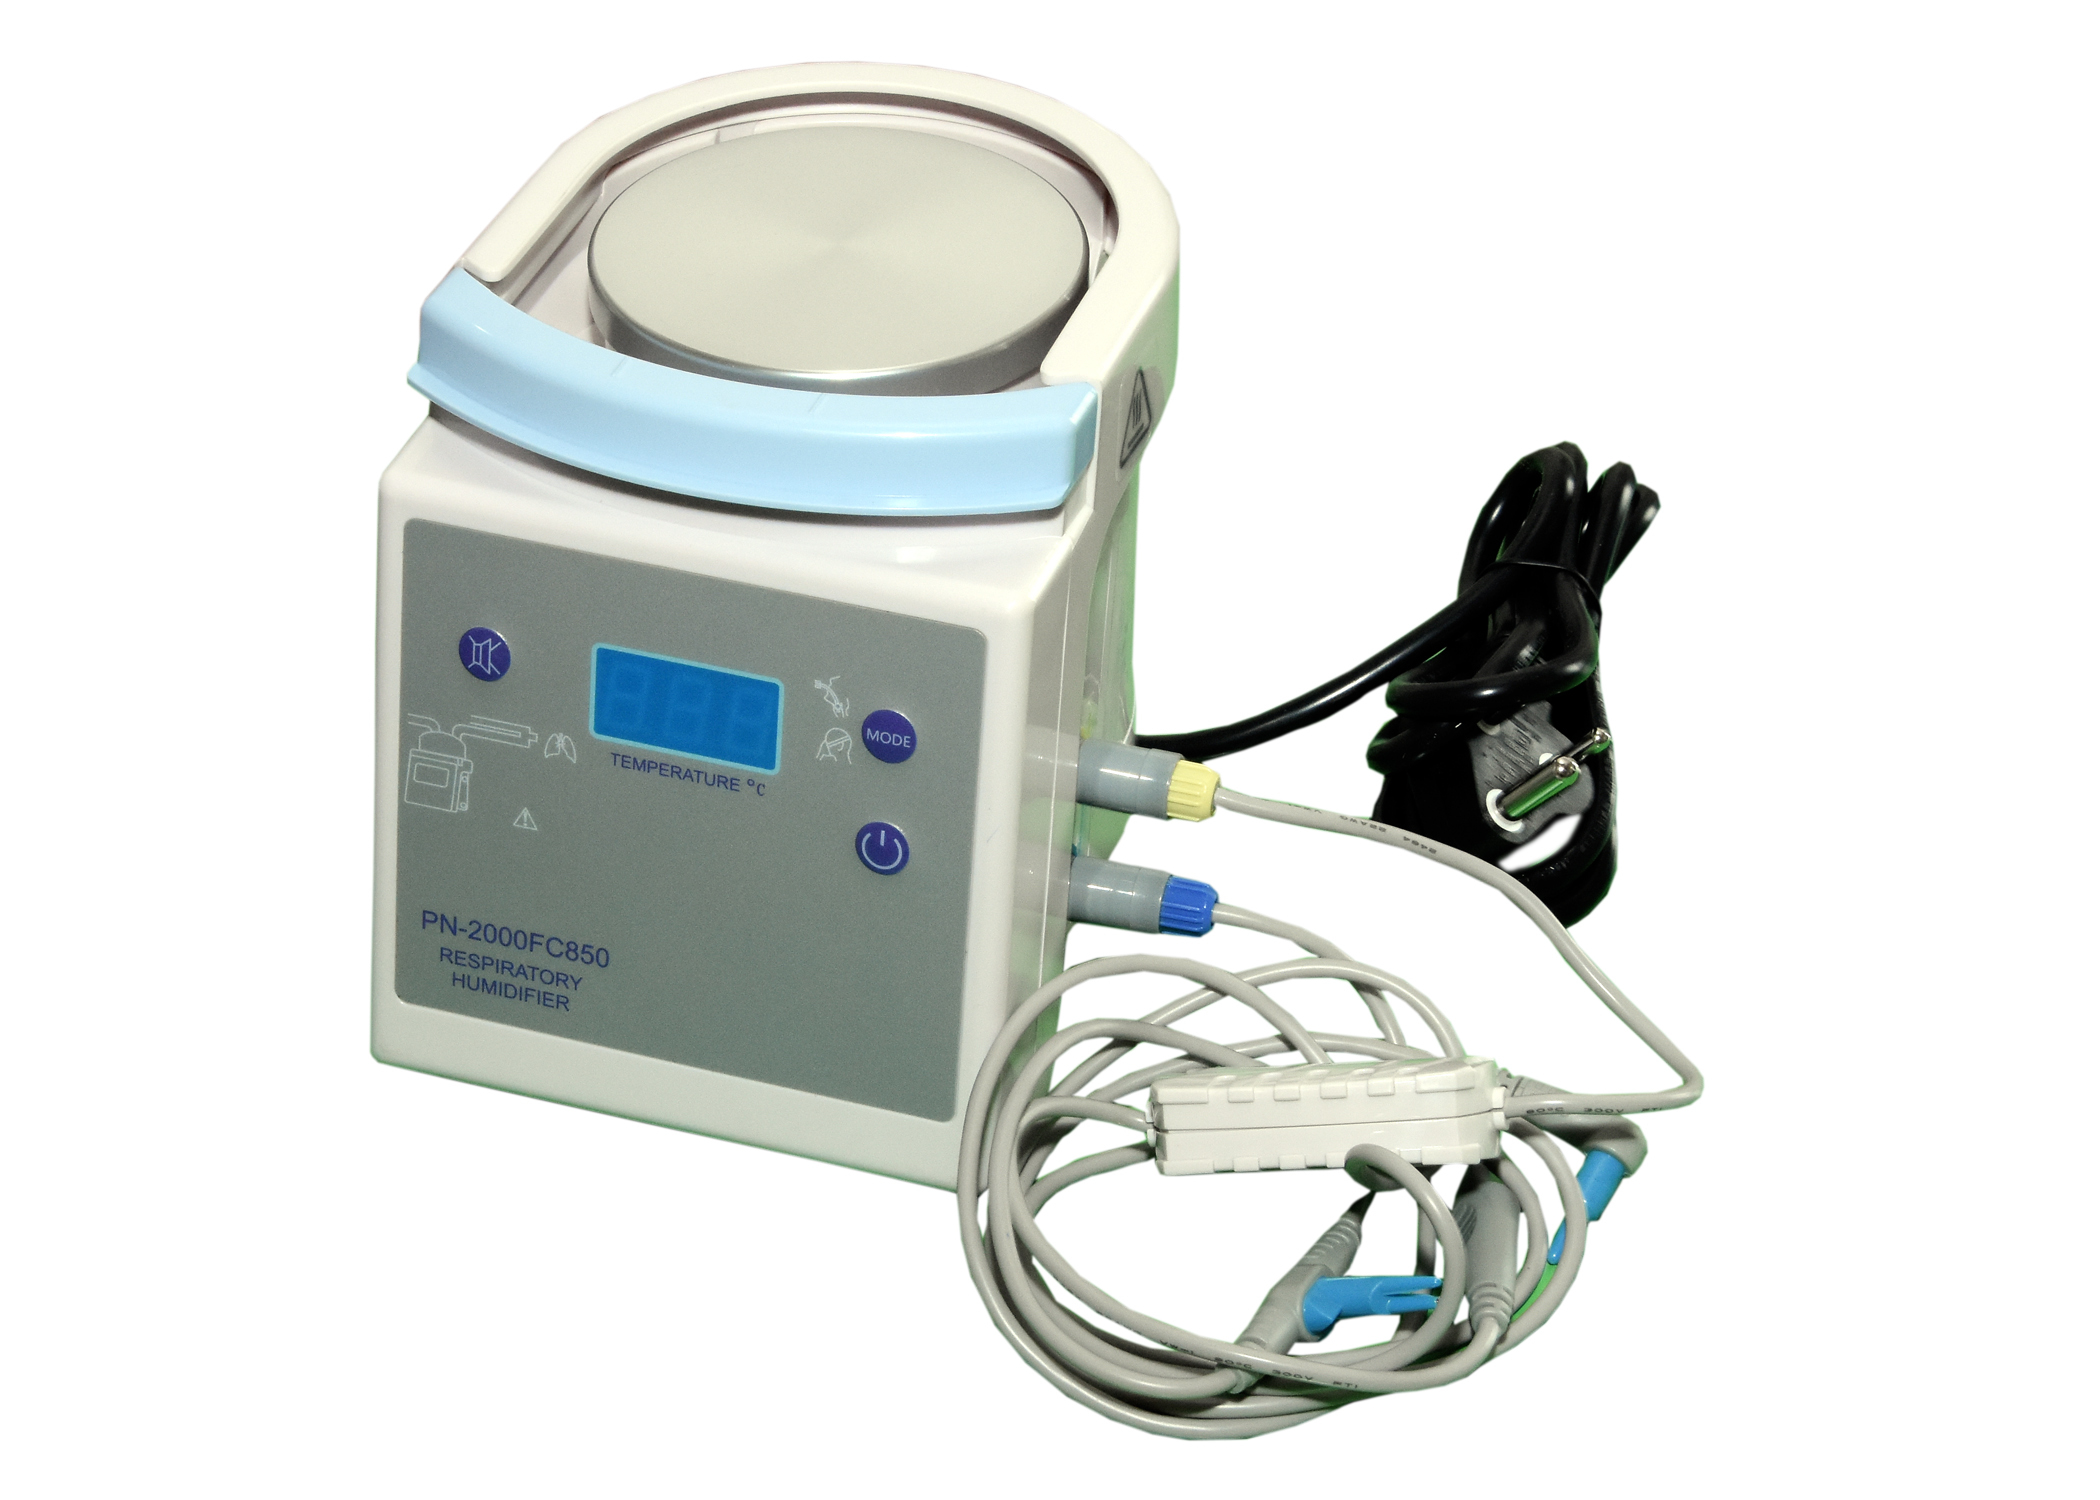 ICU Ventilator with internal compressor and 4 hour battery